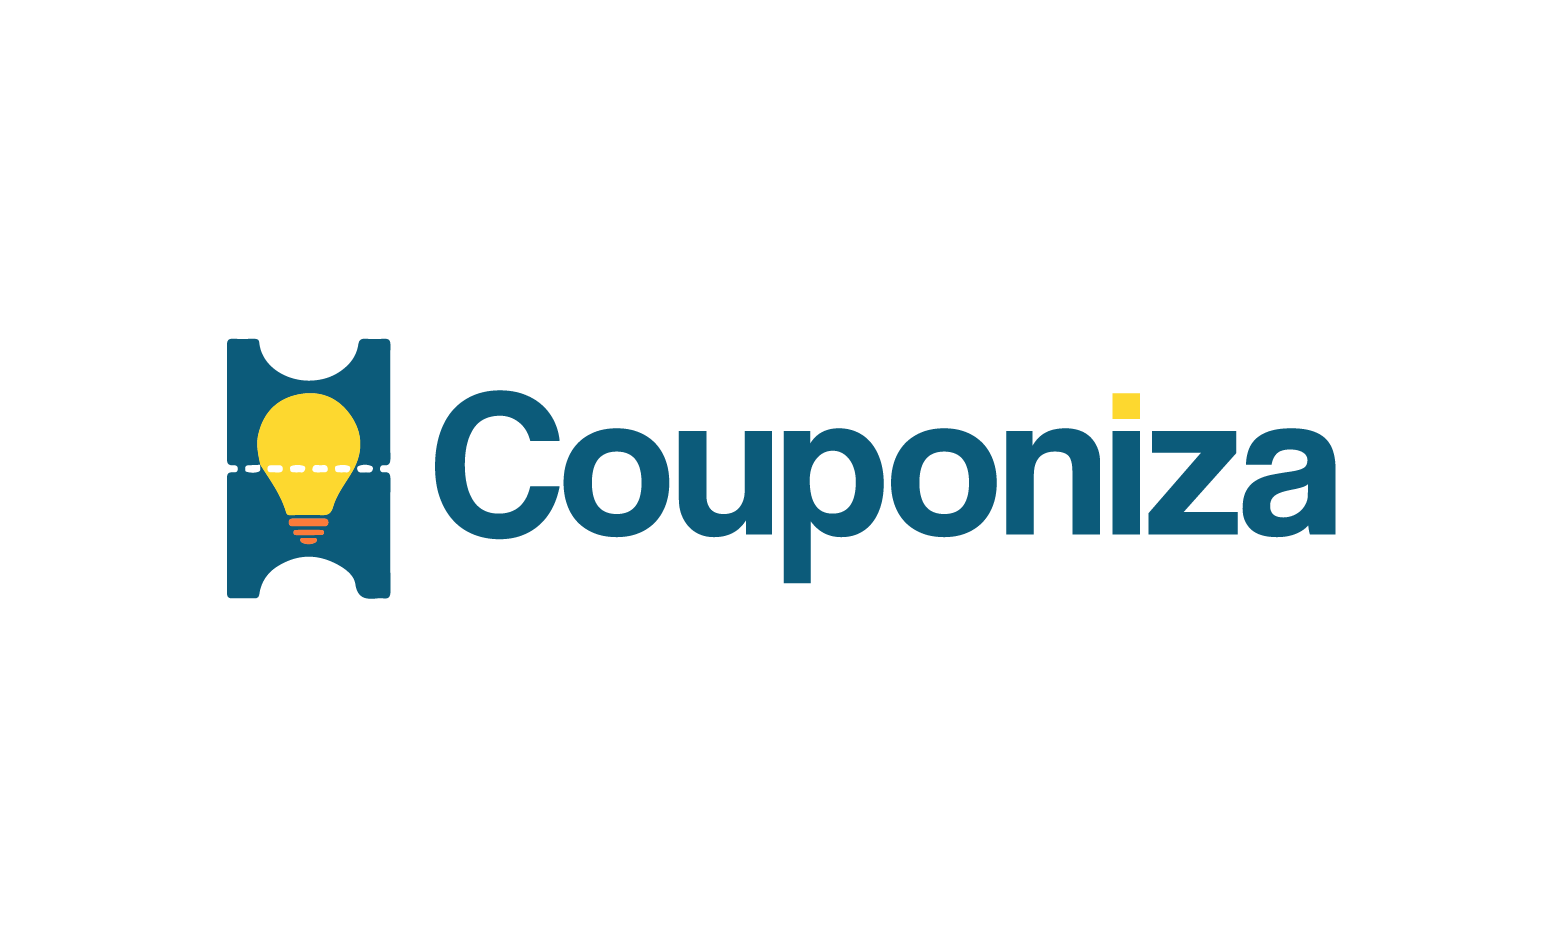 Couponiza.com - Creative brandable domain for sale